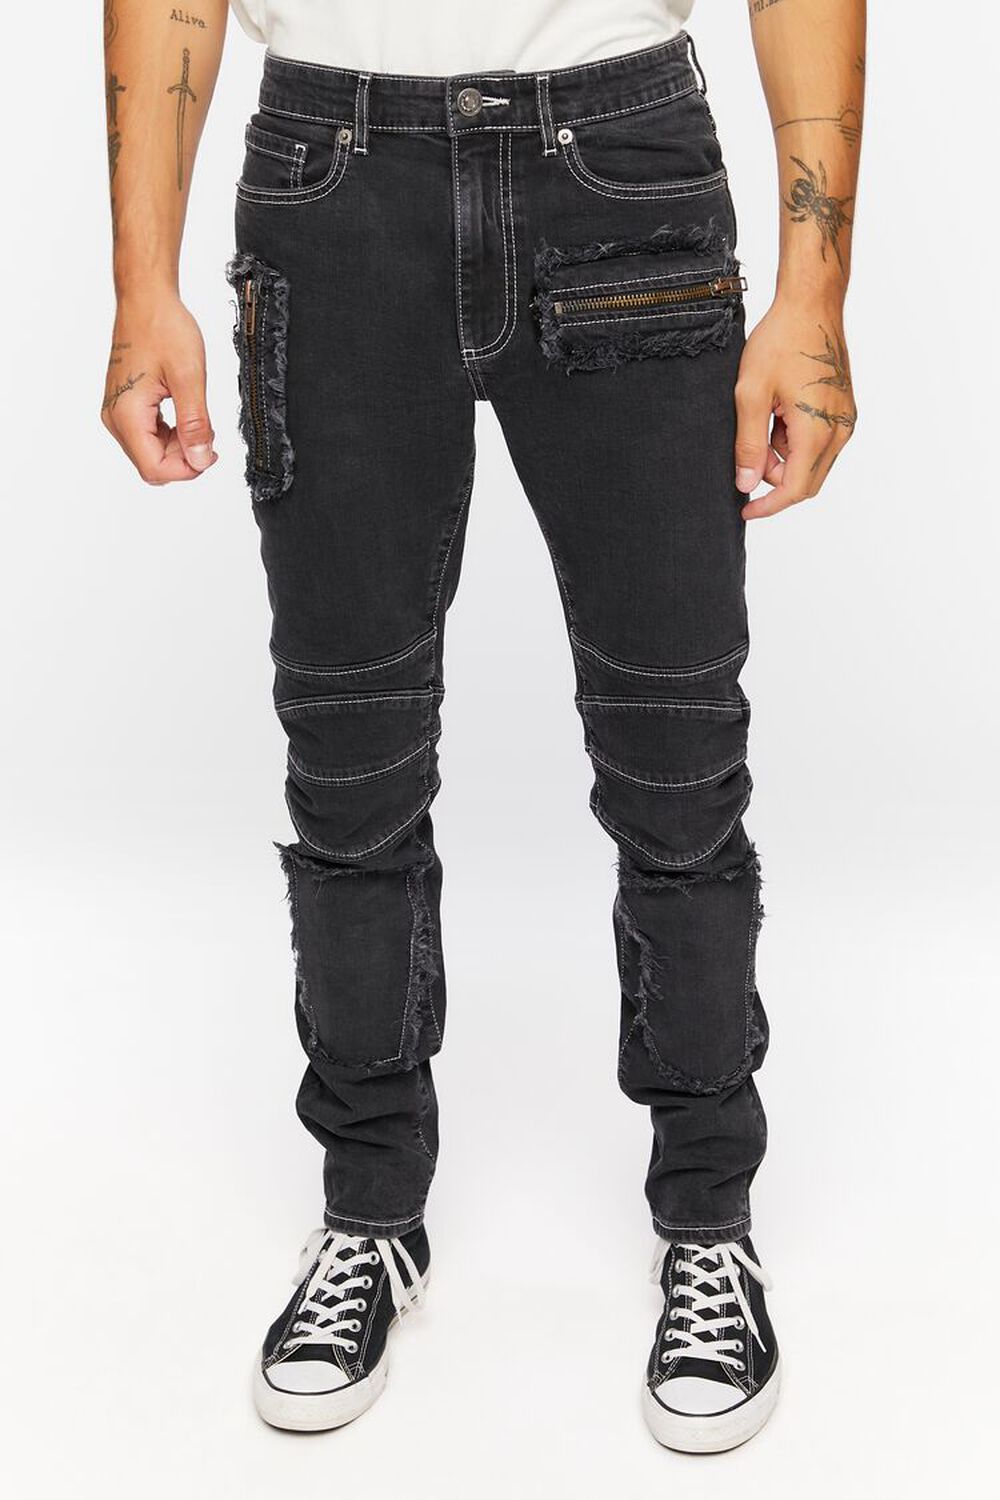 BLACK Distressed Zippered Skinny Jeans, image 2